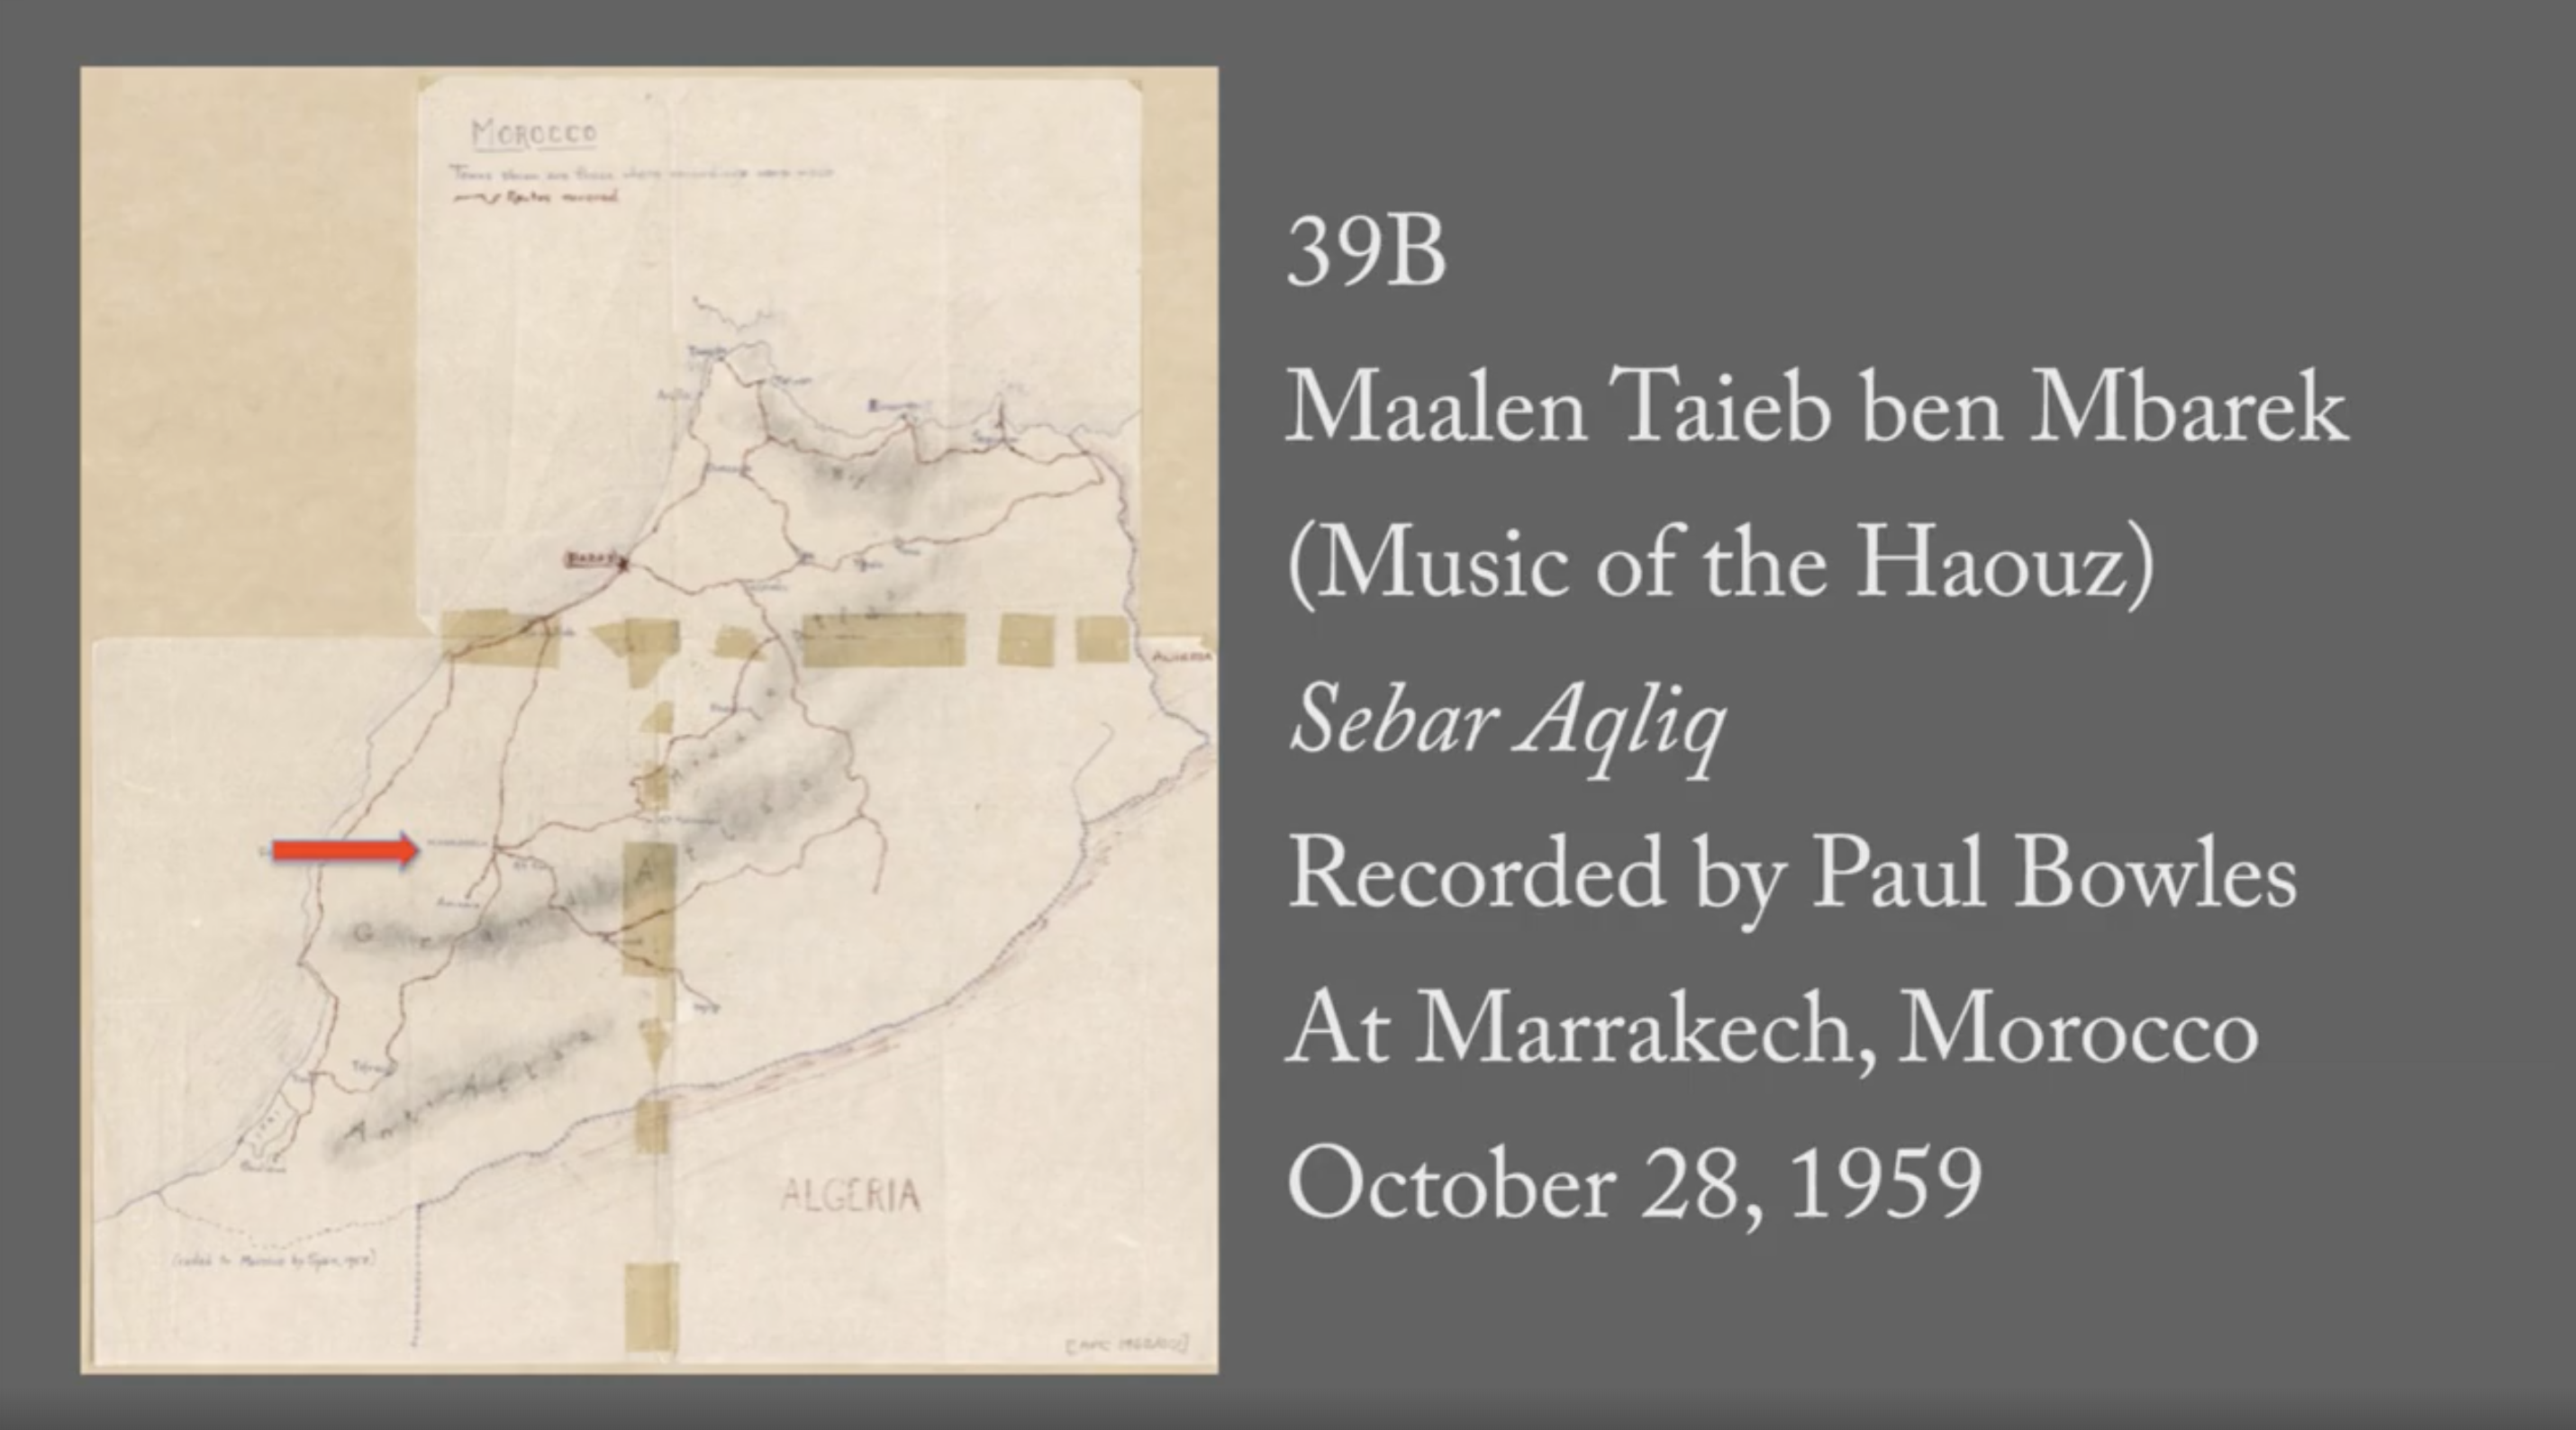  Marrakech - 39B: "Sebar Aqliq" (Music of the Haouz)